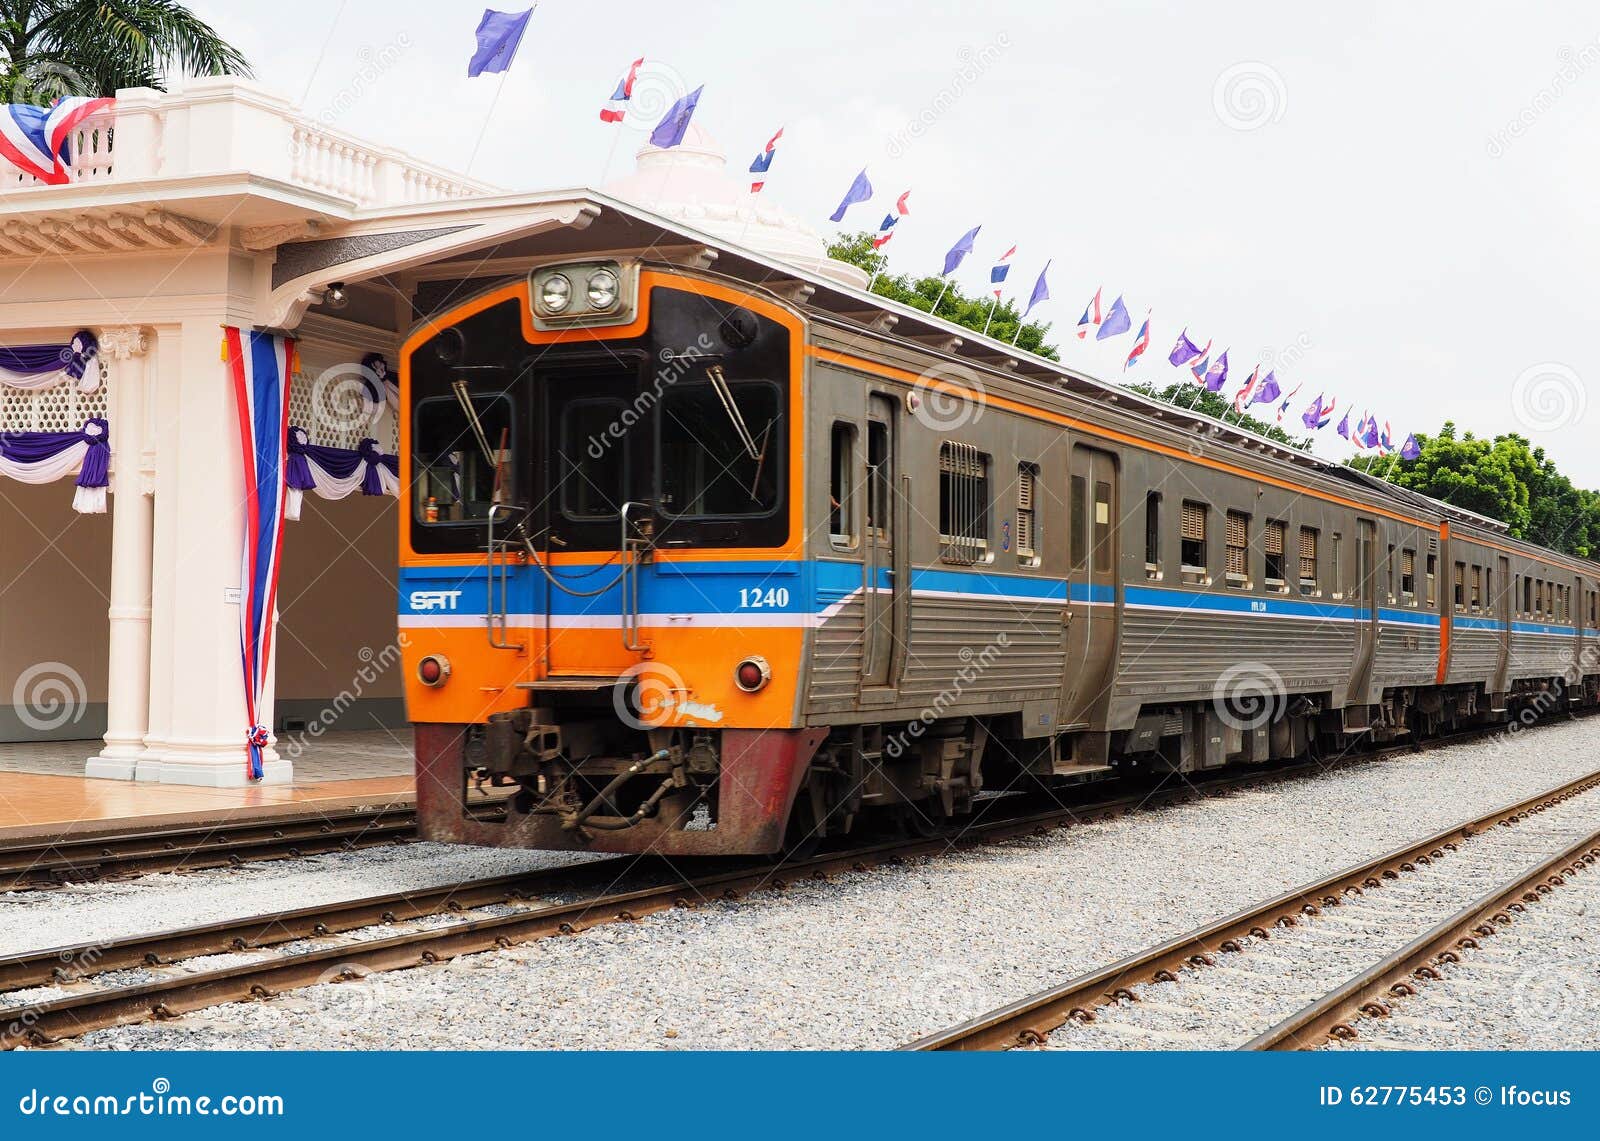 intercity-train-bangkok-thailand-october-passes-station-royal-pavilion-chitrlada-october-62775453.jpg